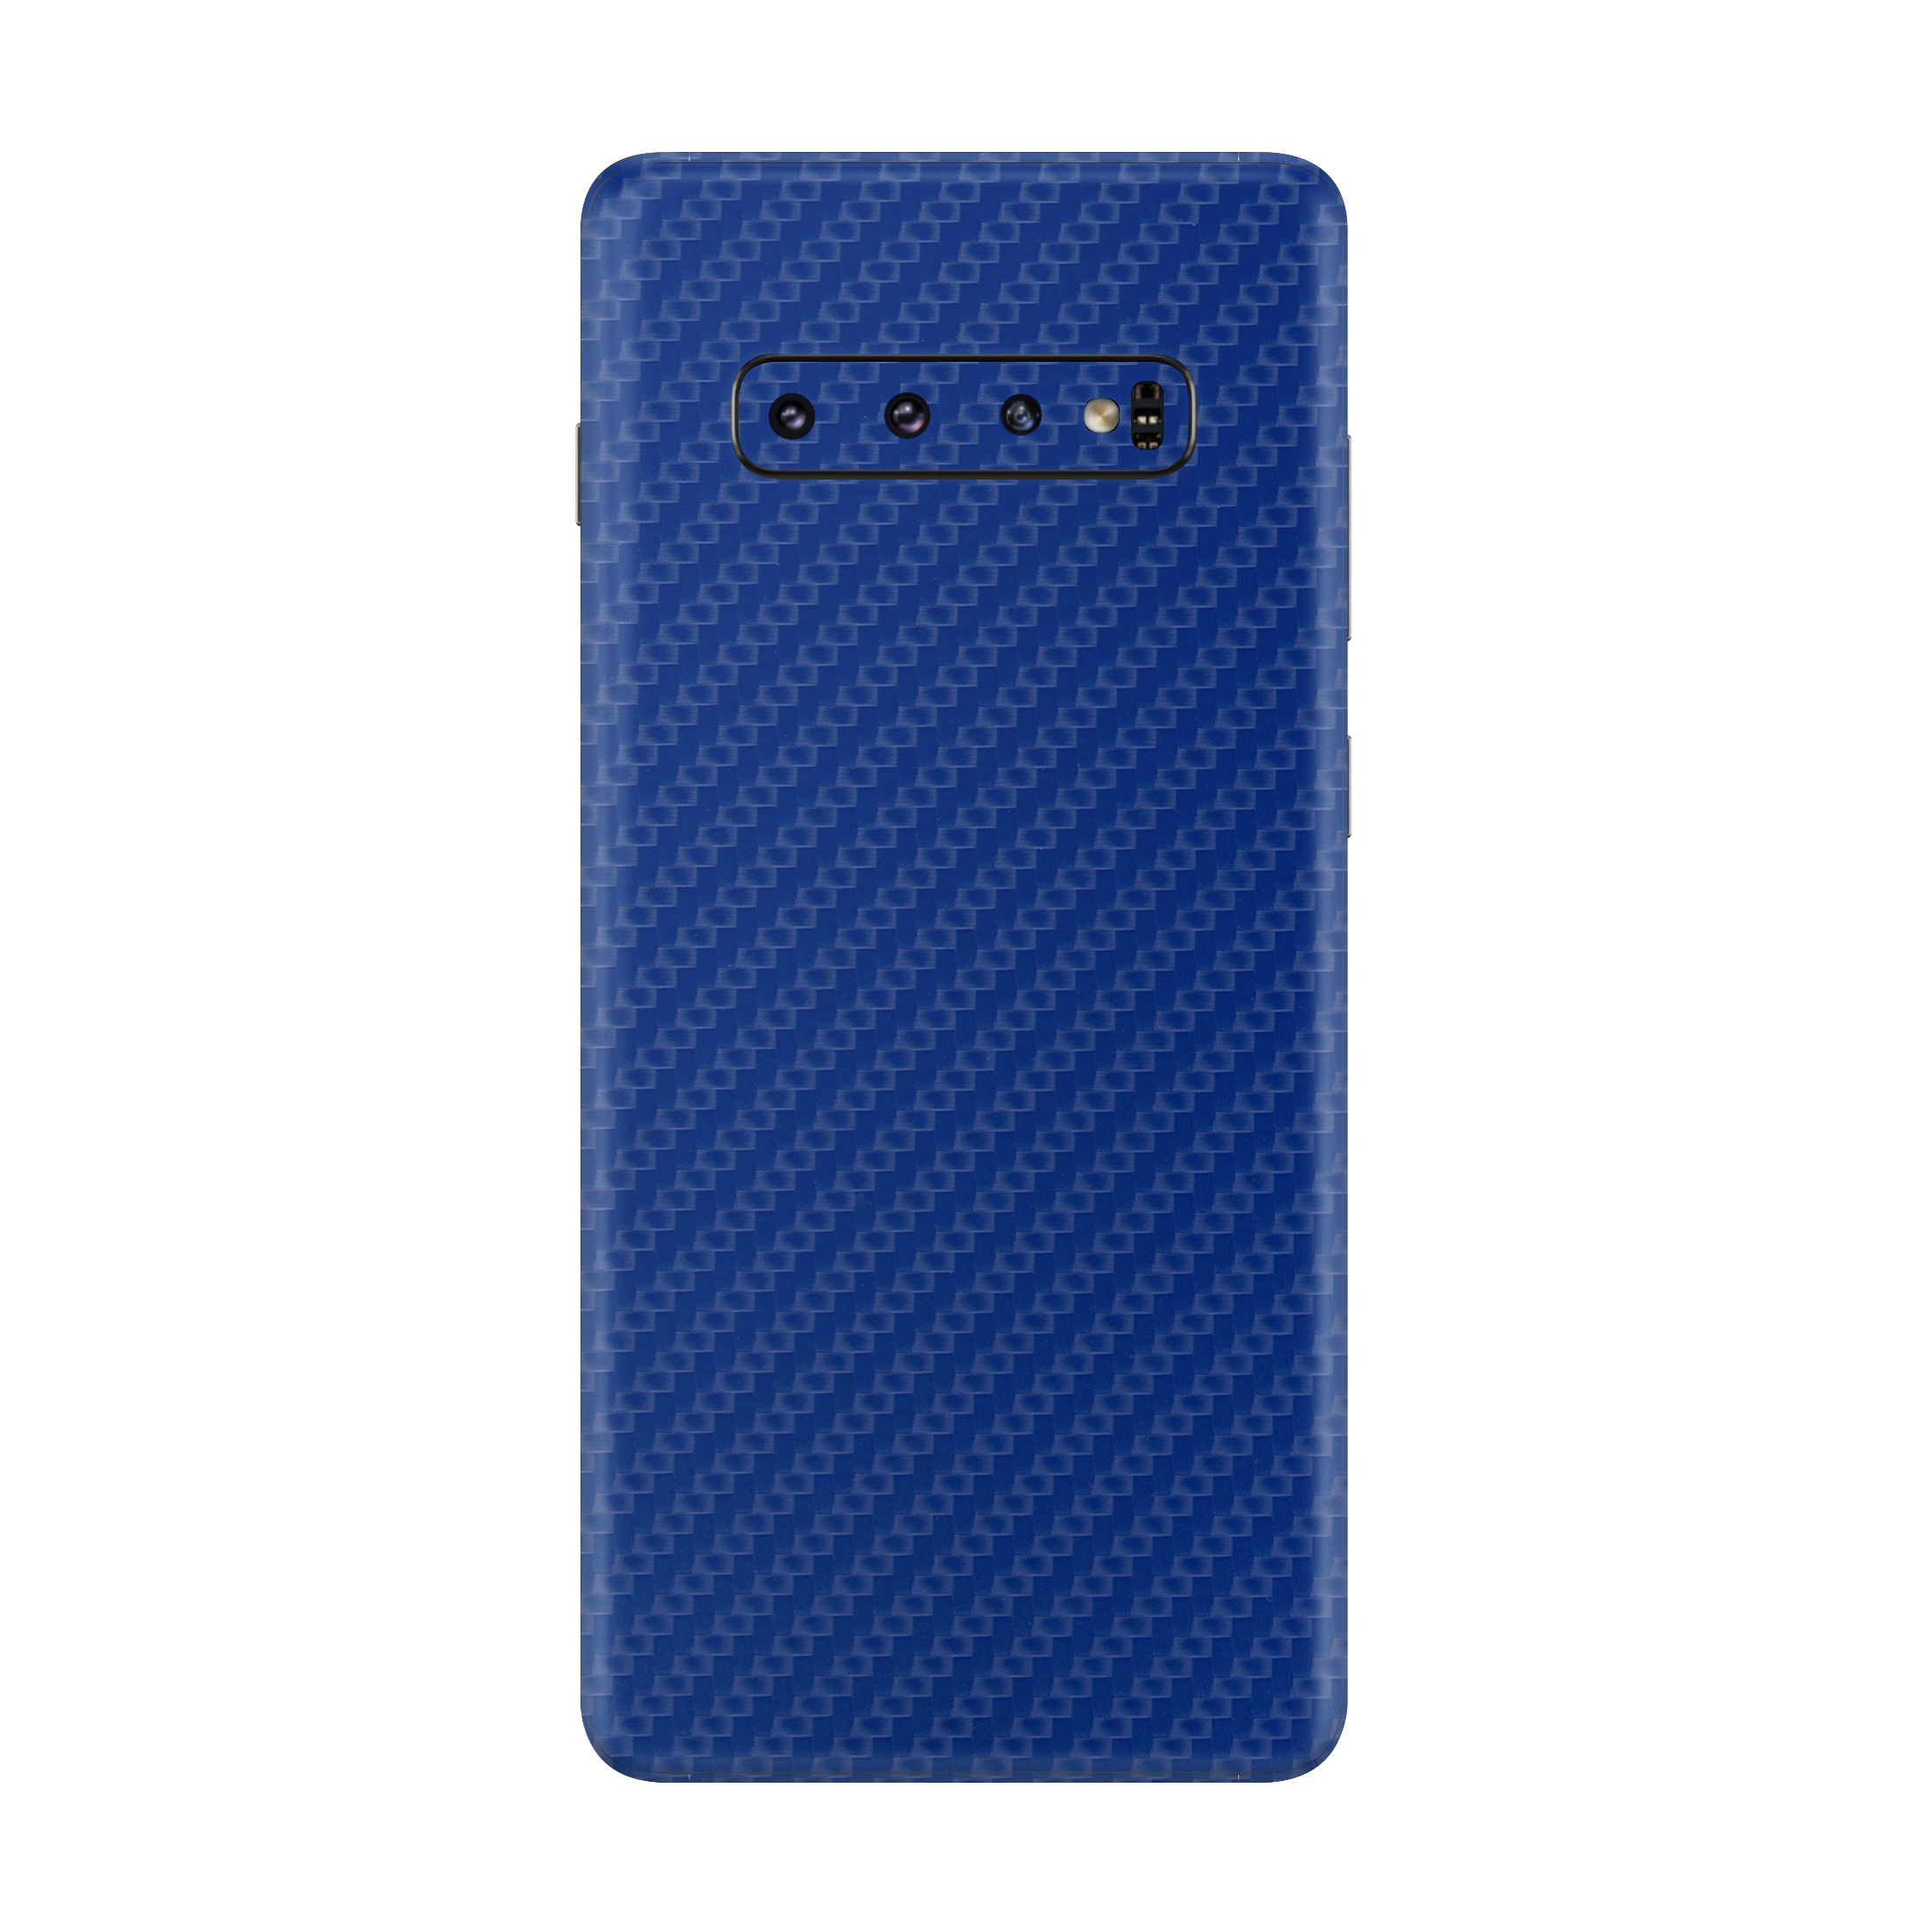 Carbon Fiber Blue Skin for Samsung S10 Plus